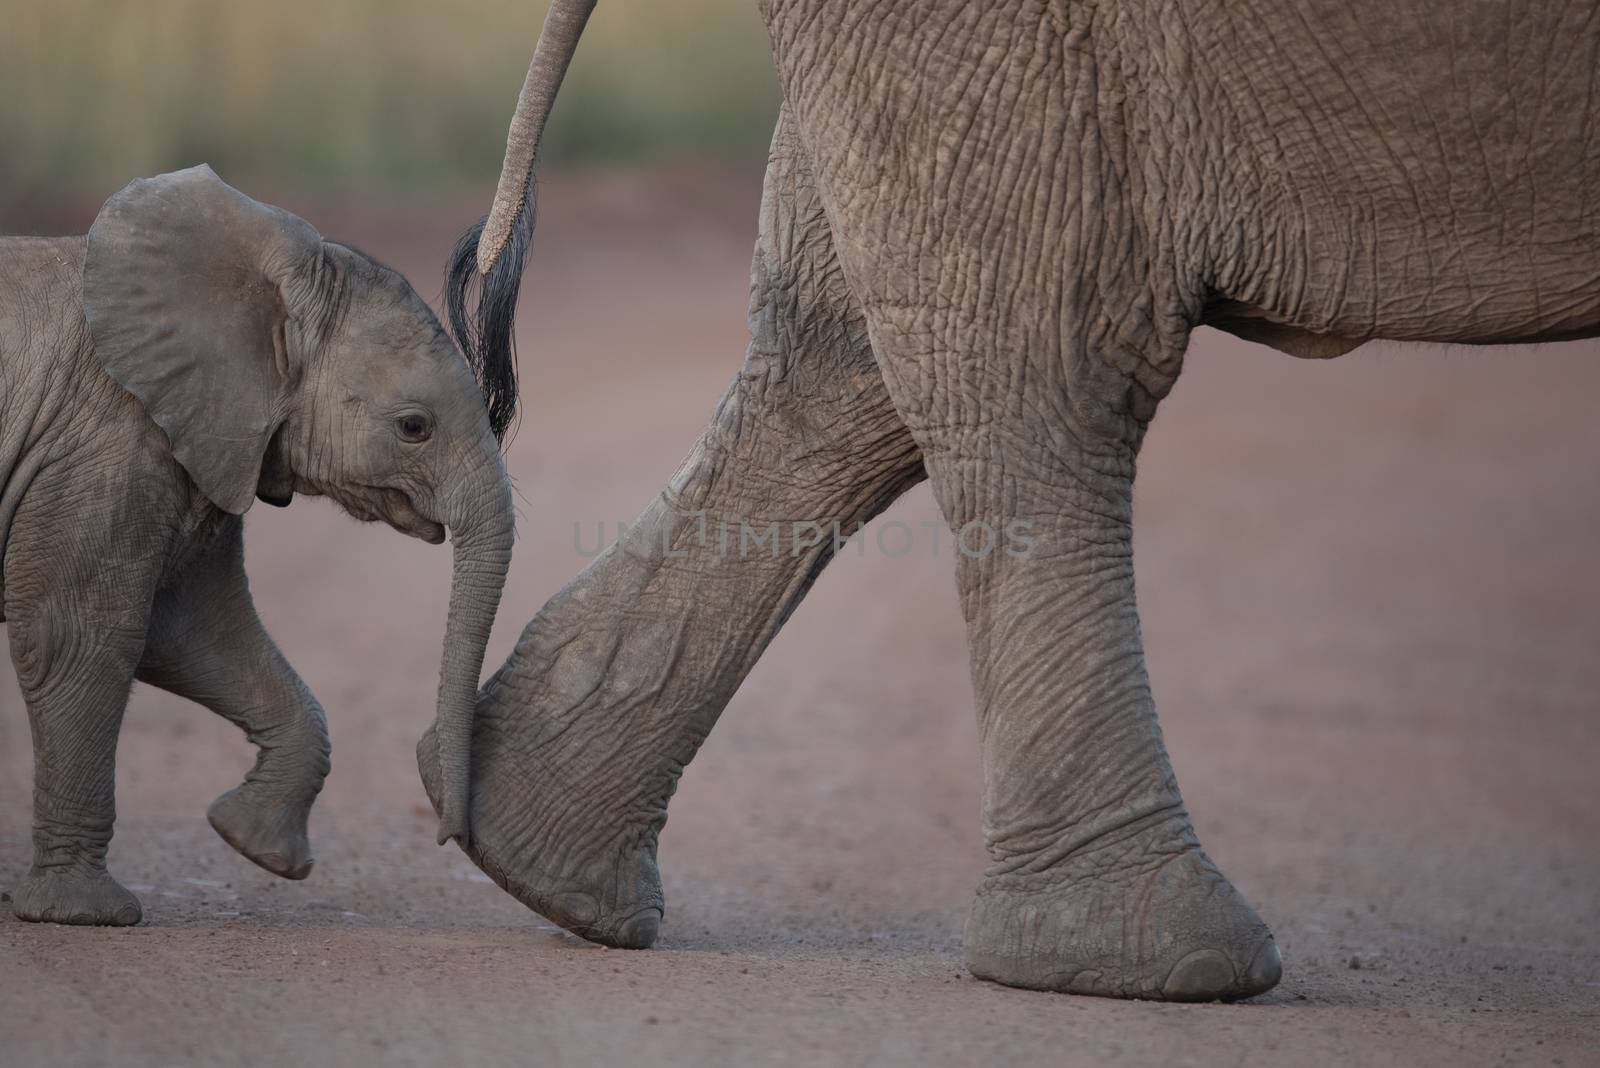 Elephant calf in the wilderness of Africa by ozkanzozmen